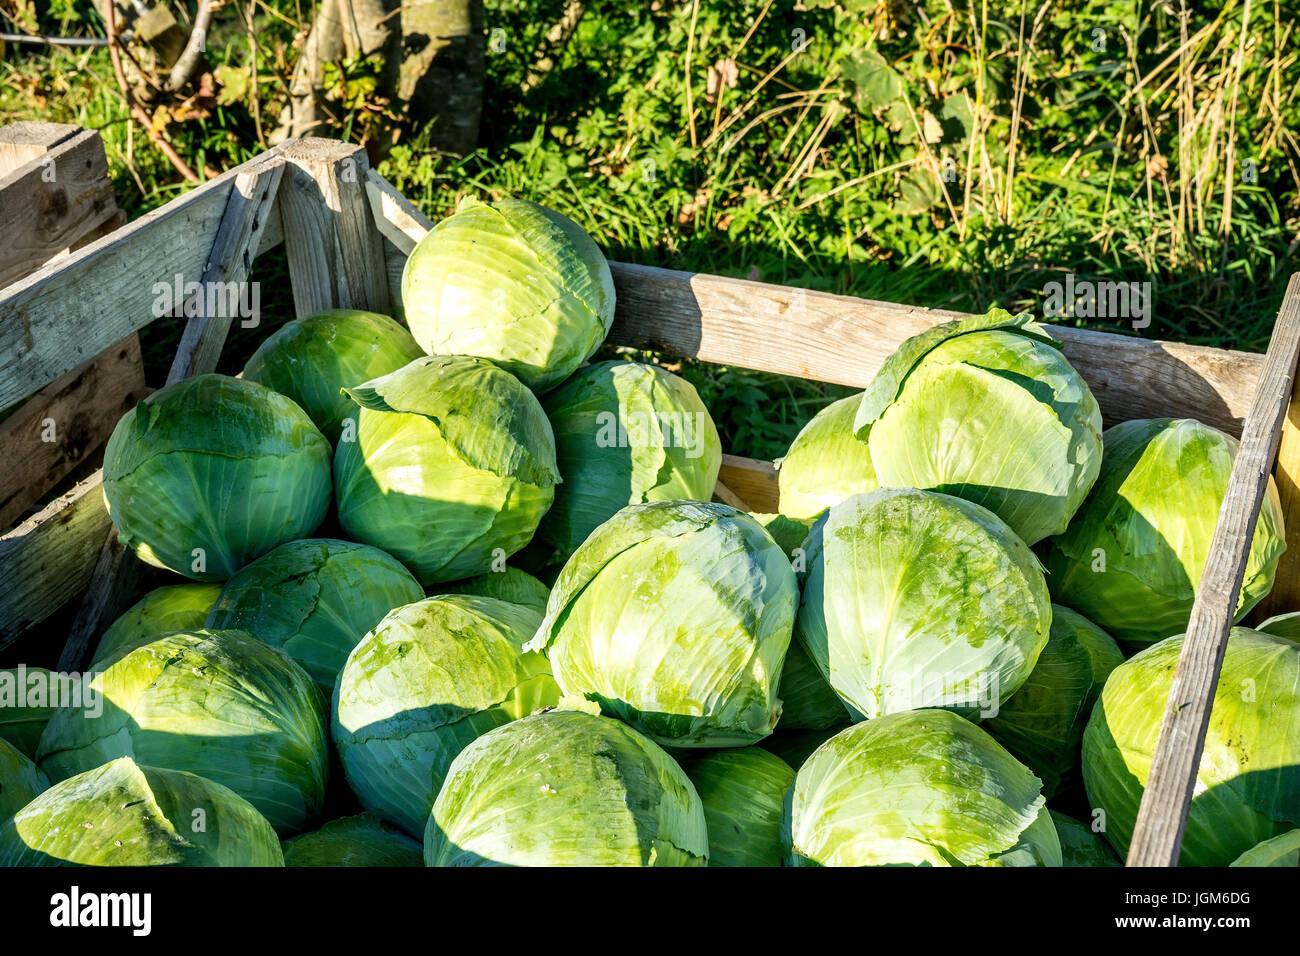 Germany, Ditmarsh, friedrichskoog, vegetables, North Germany, Schleswig - Holstein, cabbage, Fruit and vegetables, Obst und Gemuese Stock Photo